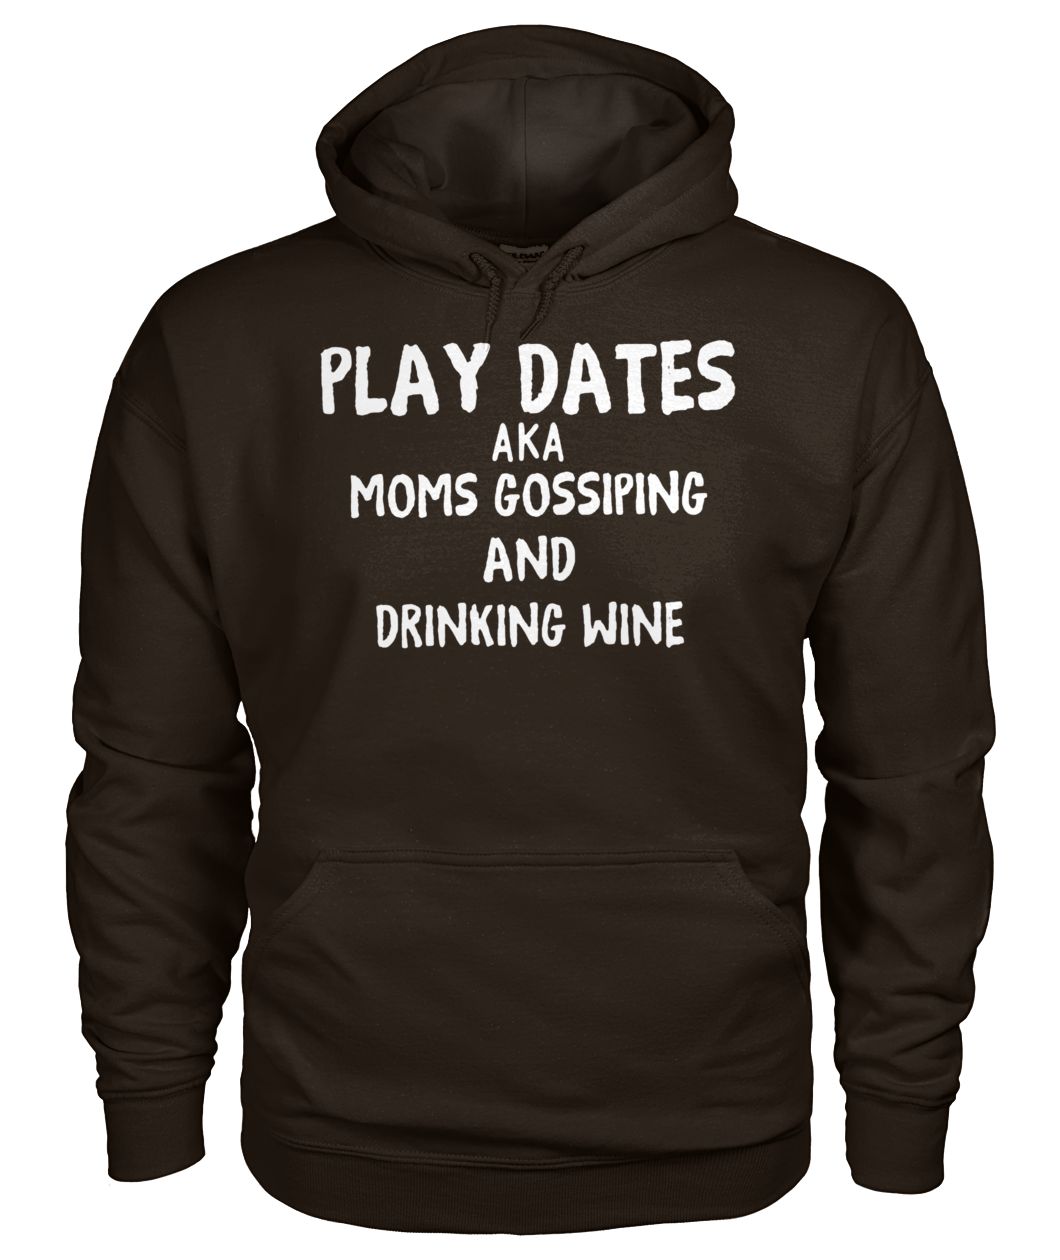 Play dates aka moms gossiping and drinking wine gildan hoodie